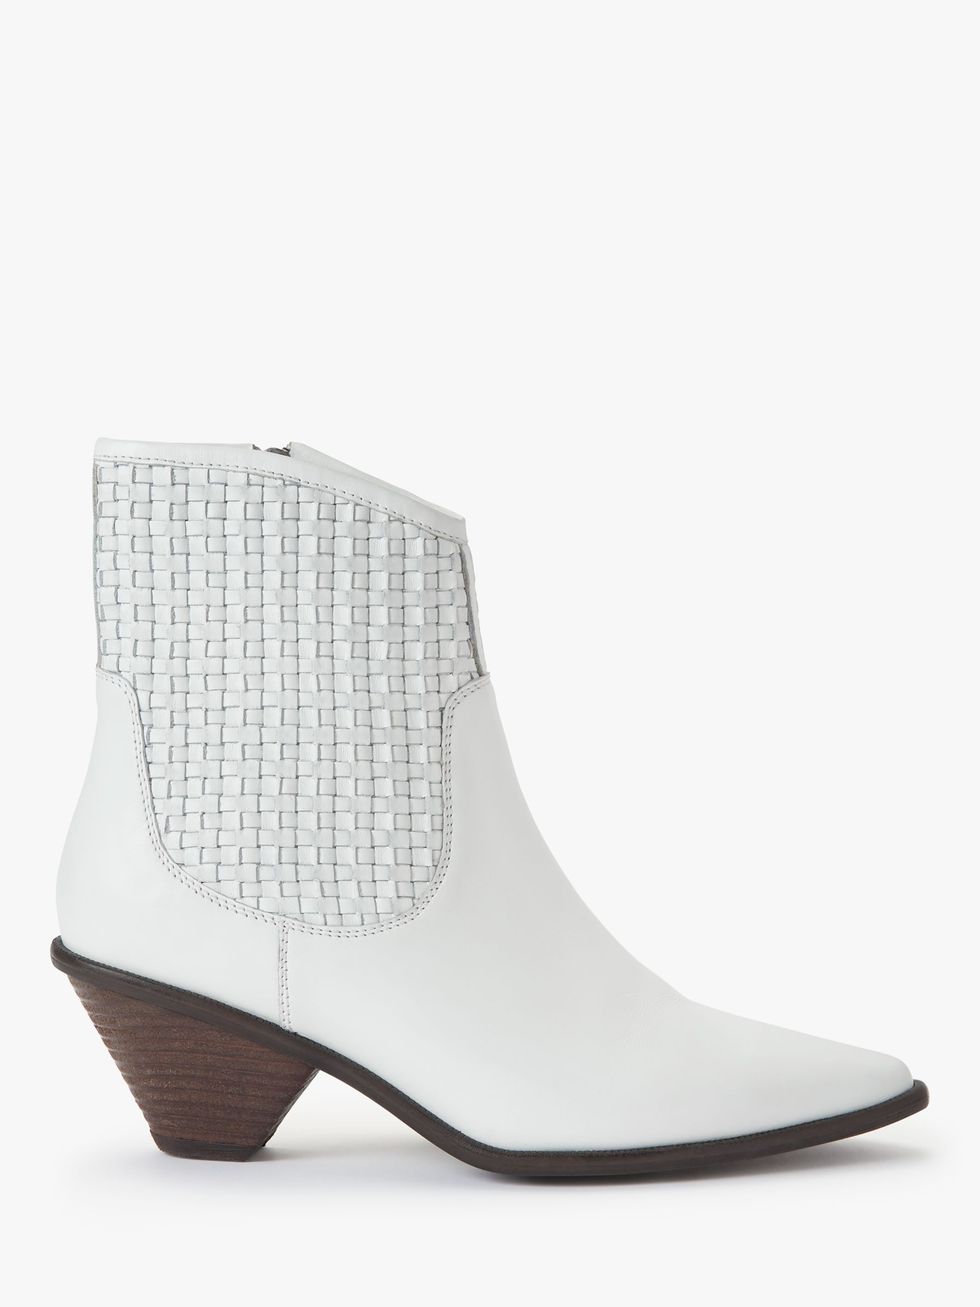 White cuban heel boots